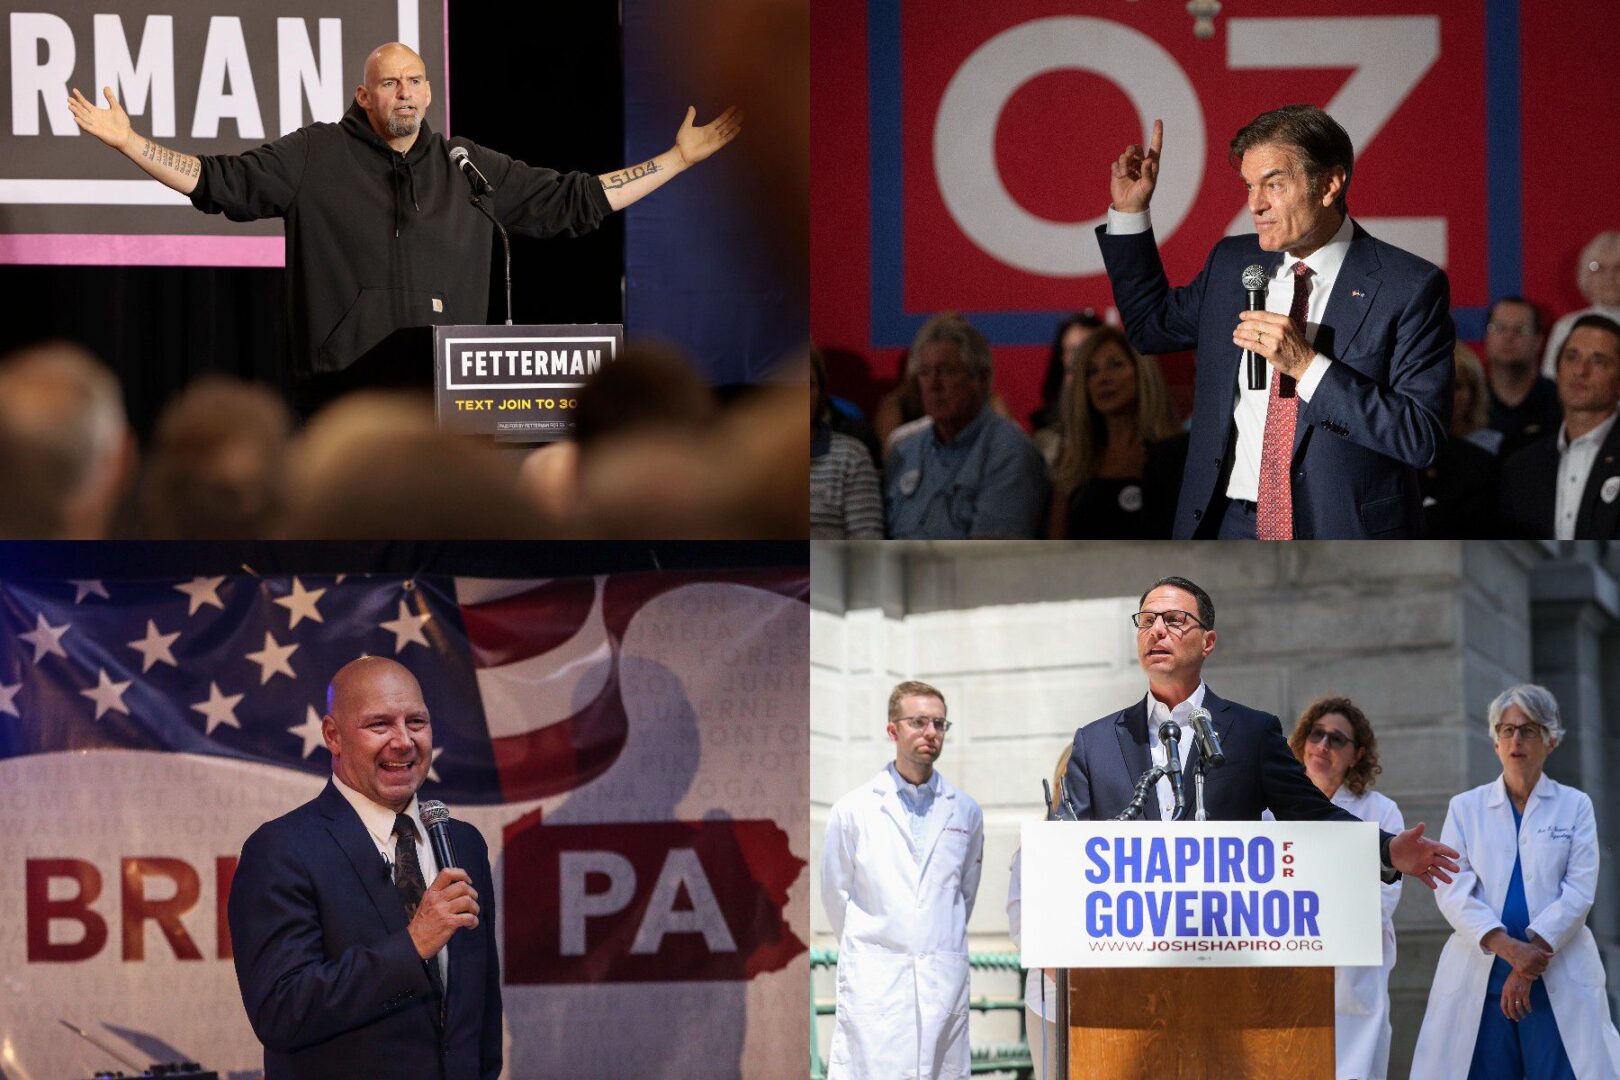 From top left, clockwise: U.S. Senate candidate John Fetterman; U.S. Senate candidate Mehmet Oz; gubernatorial candidate Josh Shapiro; gubernatorial candidate Doug Mastriano